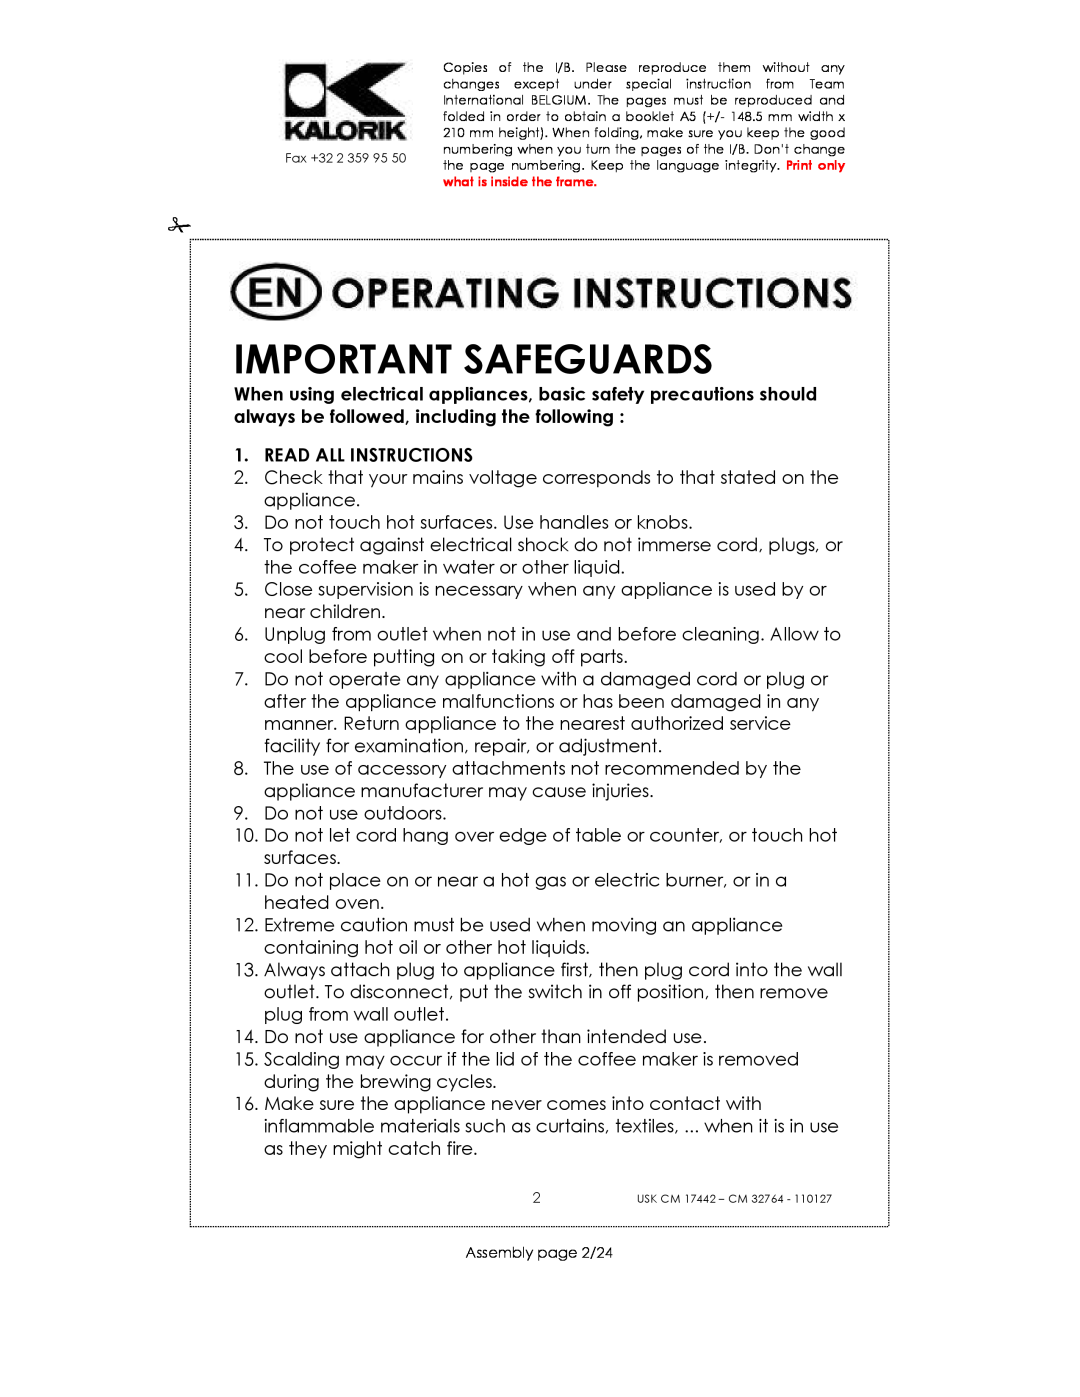 Kalorik USK CM 17442, USK CM 32764 manual Important Safeguards, Read All Instructions 